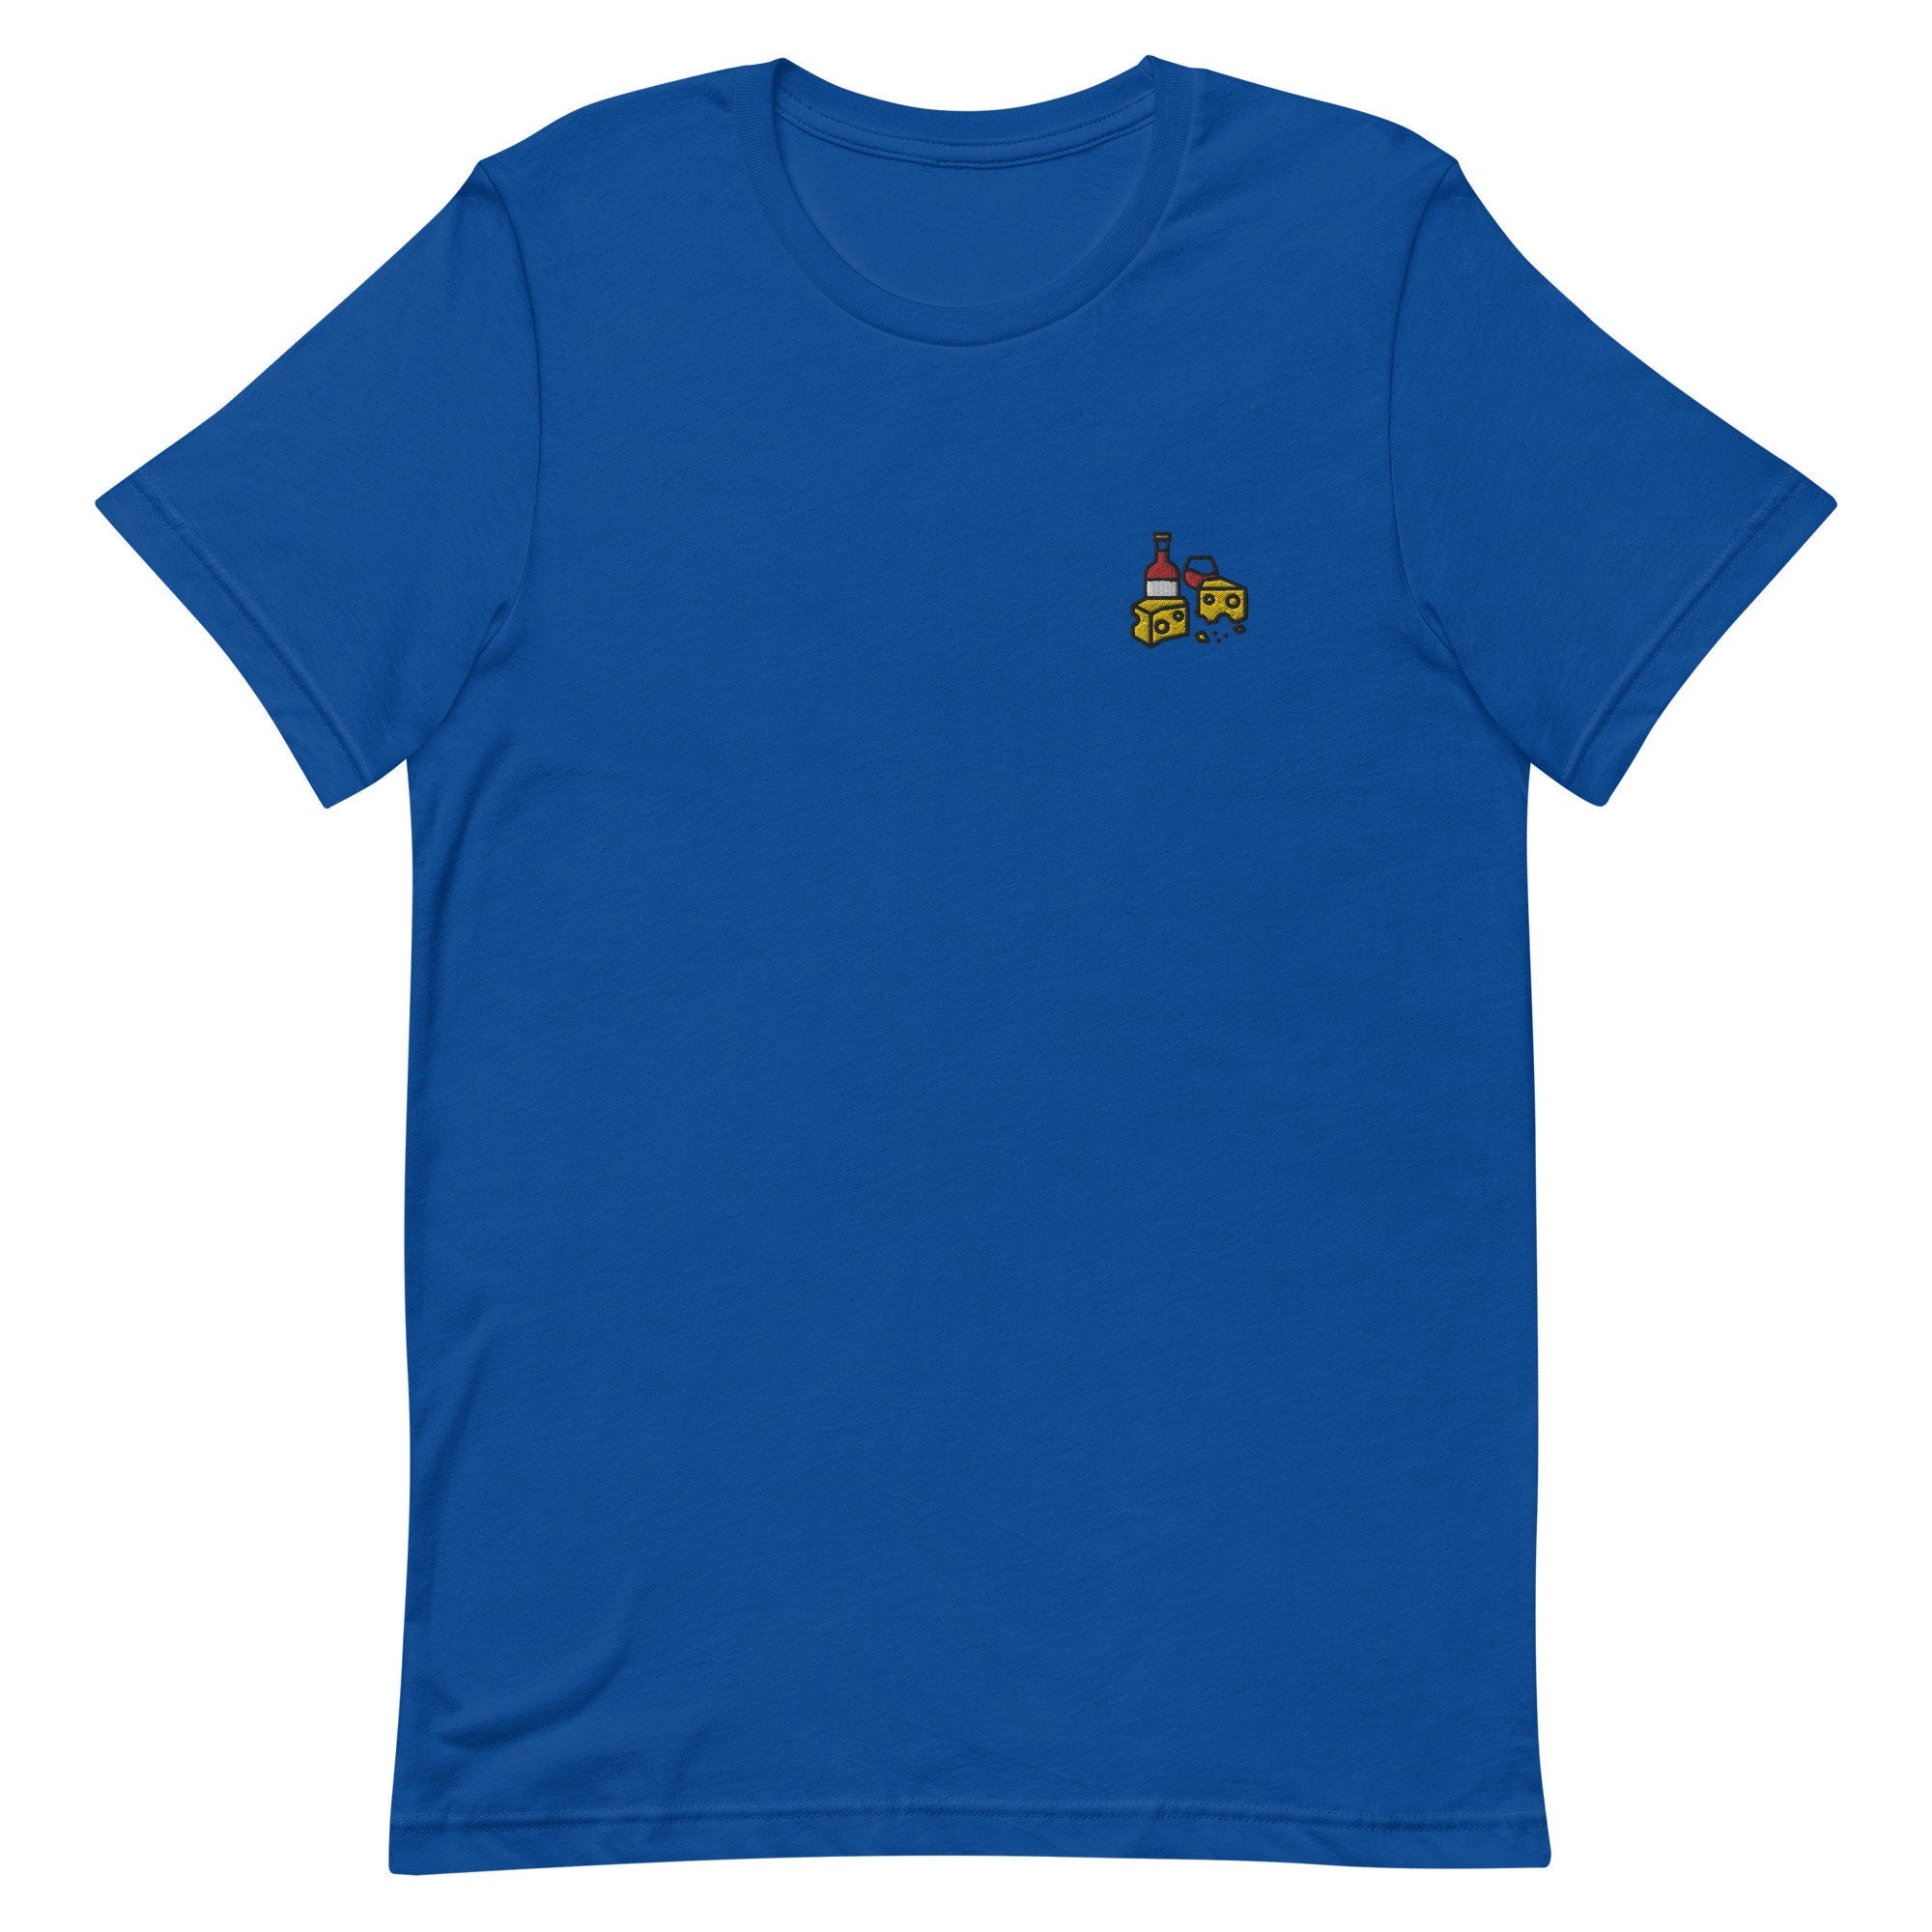 Wine and Cheese Premium Men's T-Shirt, Embroidered Men's T-Shirt Gift for Boyfriend, Men's Short Sleeve Shirt - Multiple Colors